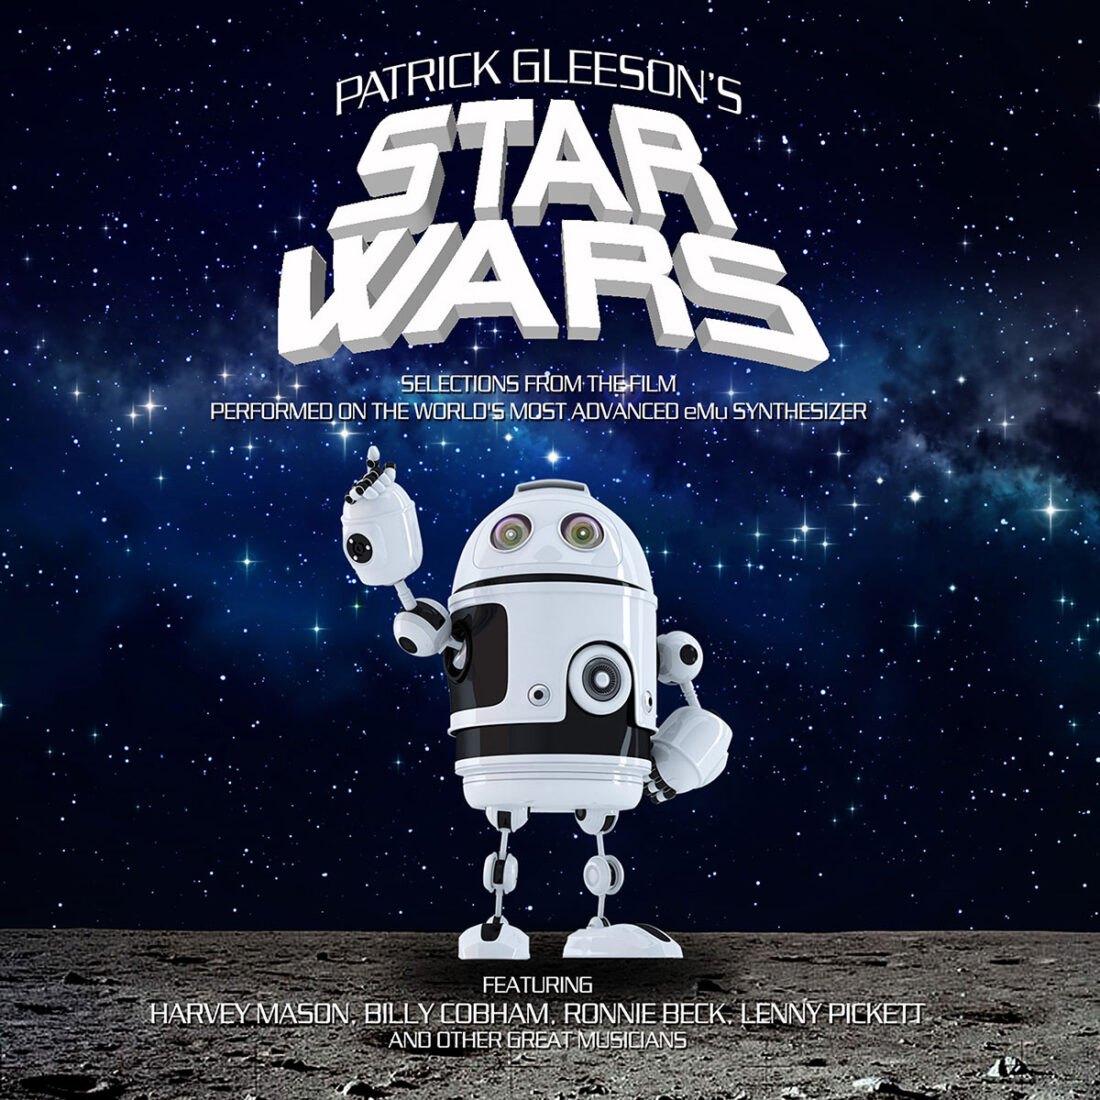 Patrick Gleeson’s Electronic Star Wars Soundtrack CD